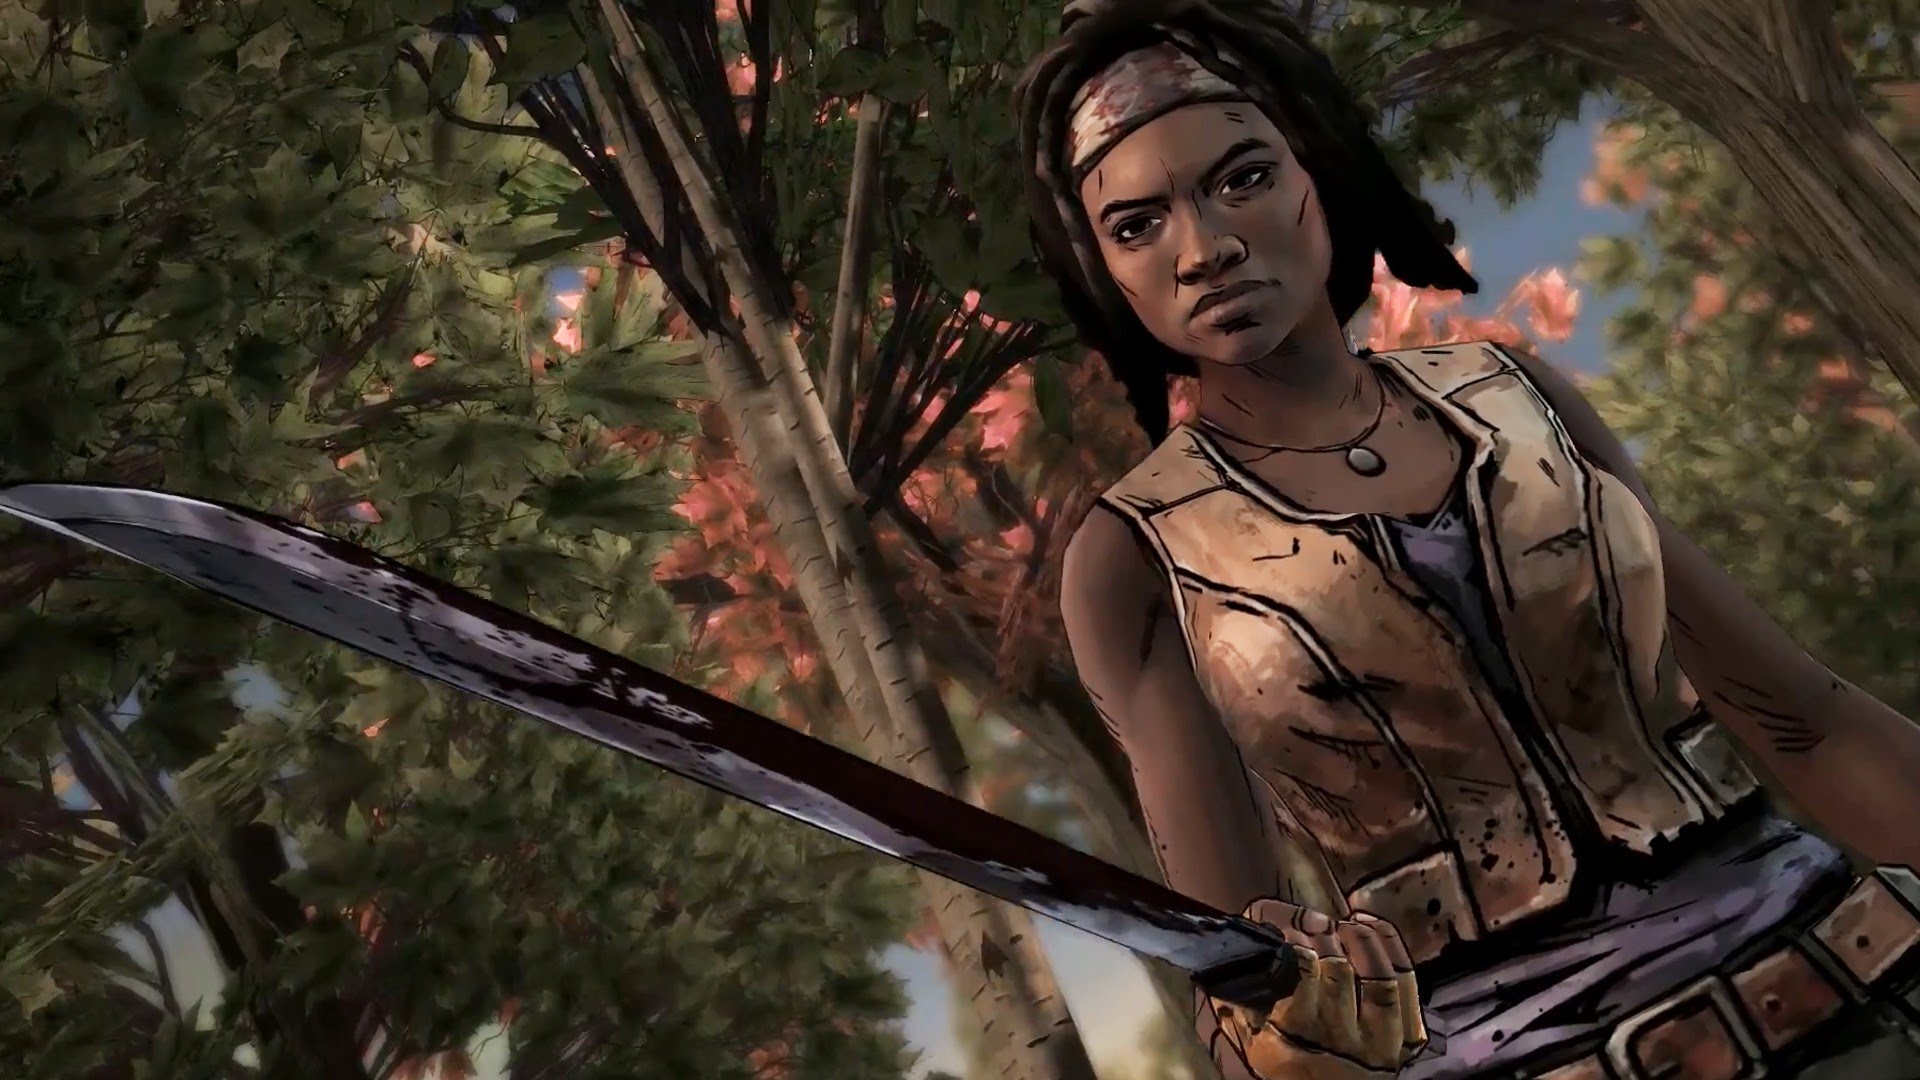 REVEALED: “The Walking Dead: Michonne” Episode 1 Launch Trailer